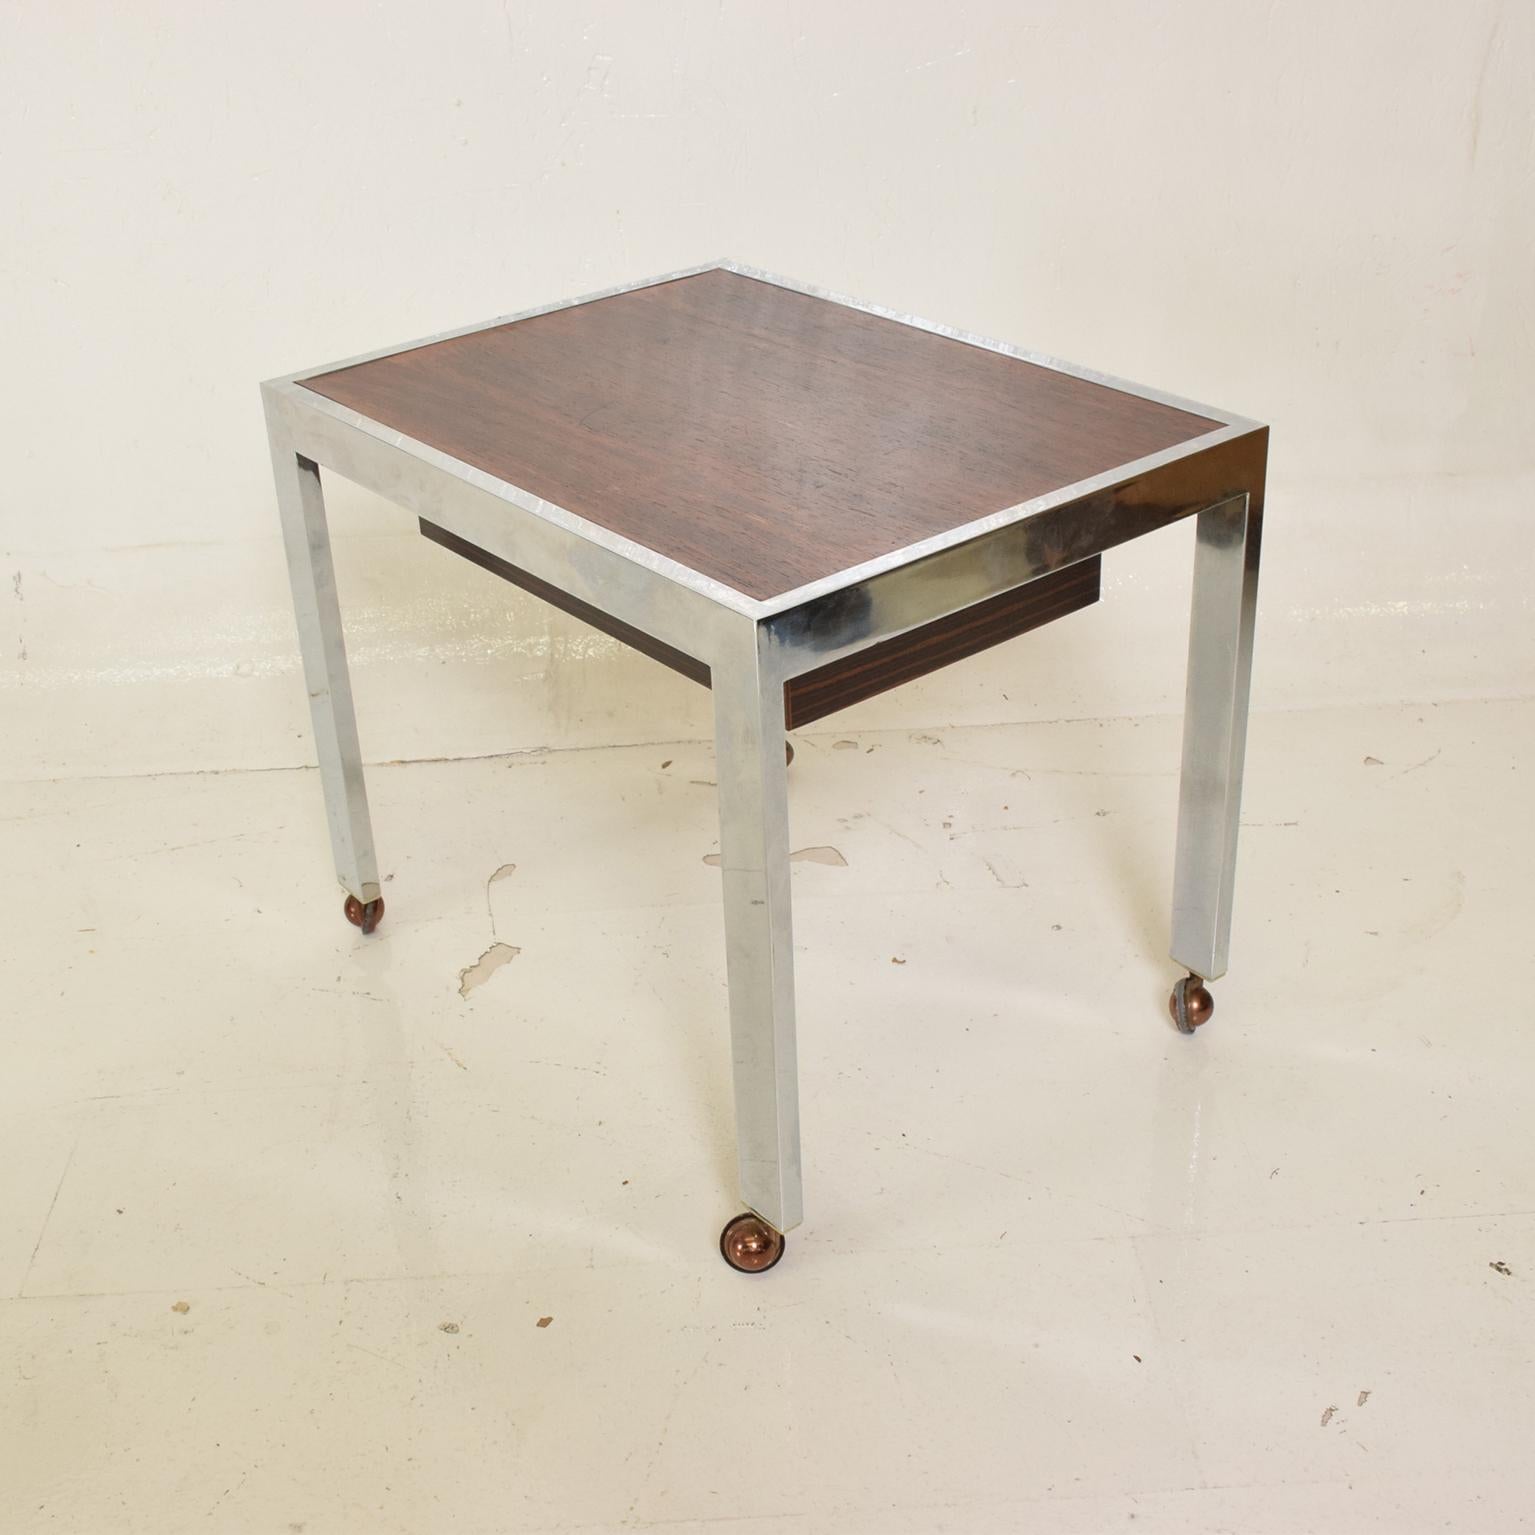 Scandinavian Danish Modern Side Table in Rosewood and Chrome (Skandinavische Moderne)